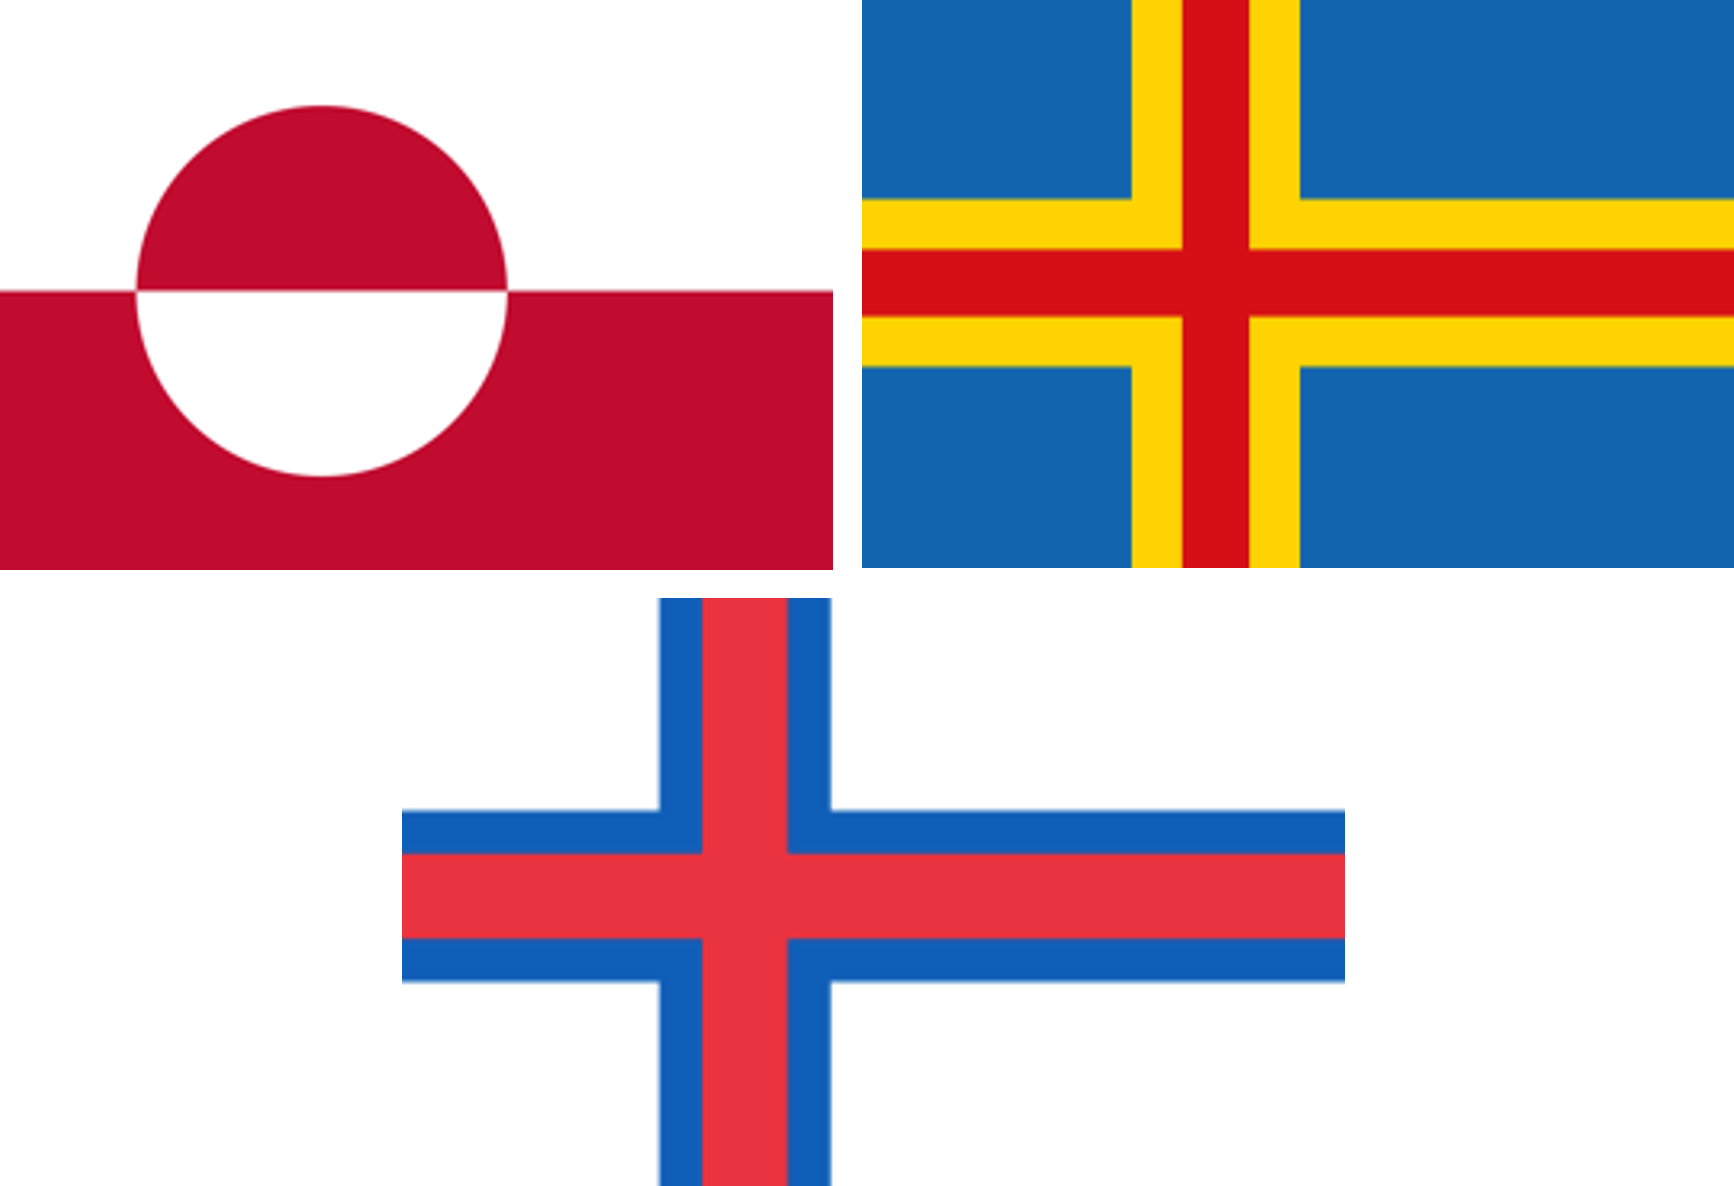 Three flags, Greenland, Faroe Islands and Åland Islands